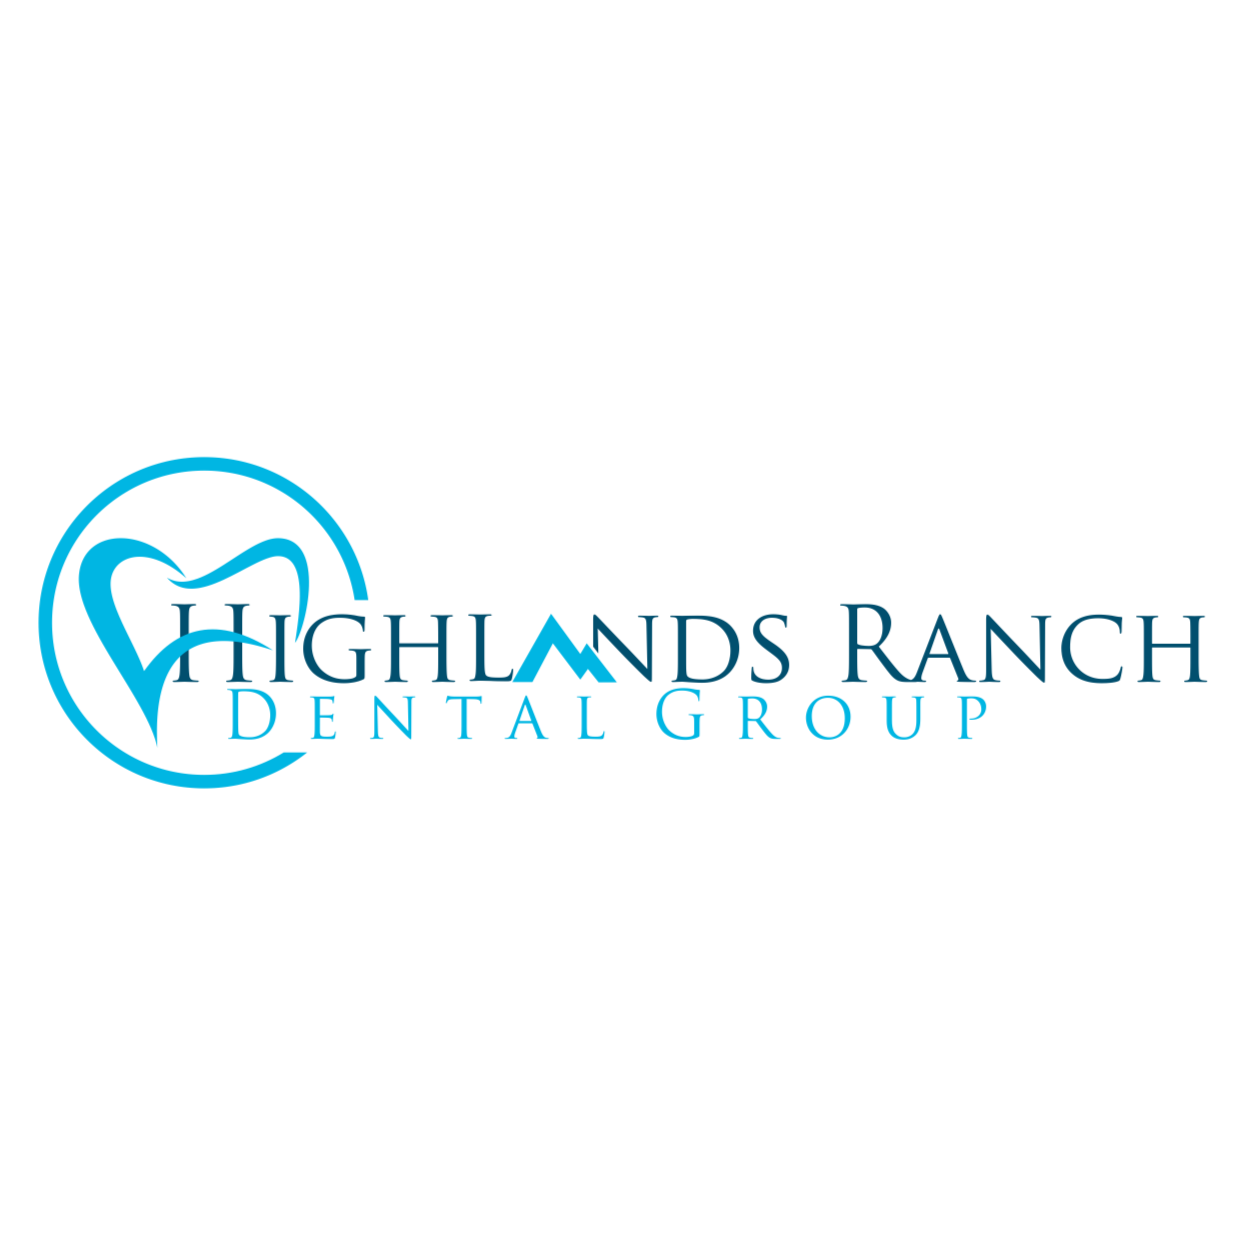 Highlands Ranch Dental Group - Highlands Ranch, CO 80126 - (720)439-2984 | ShowMeLocal.com